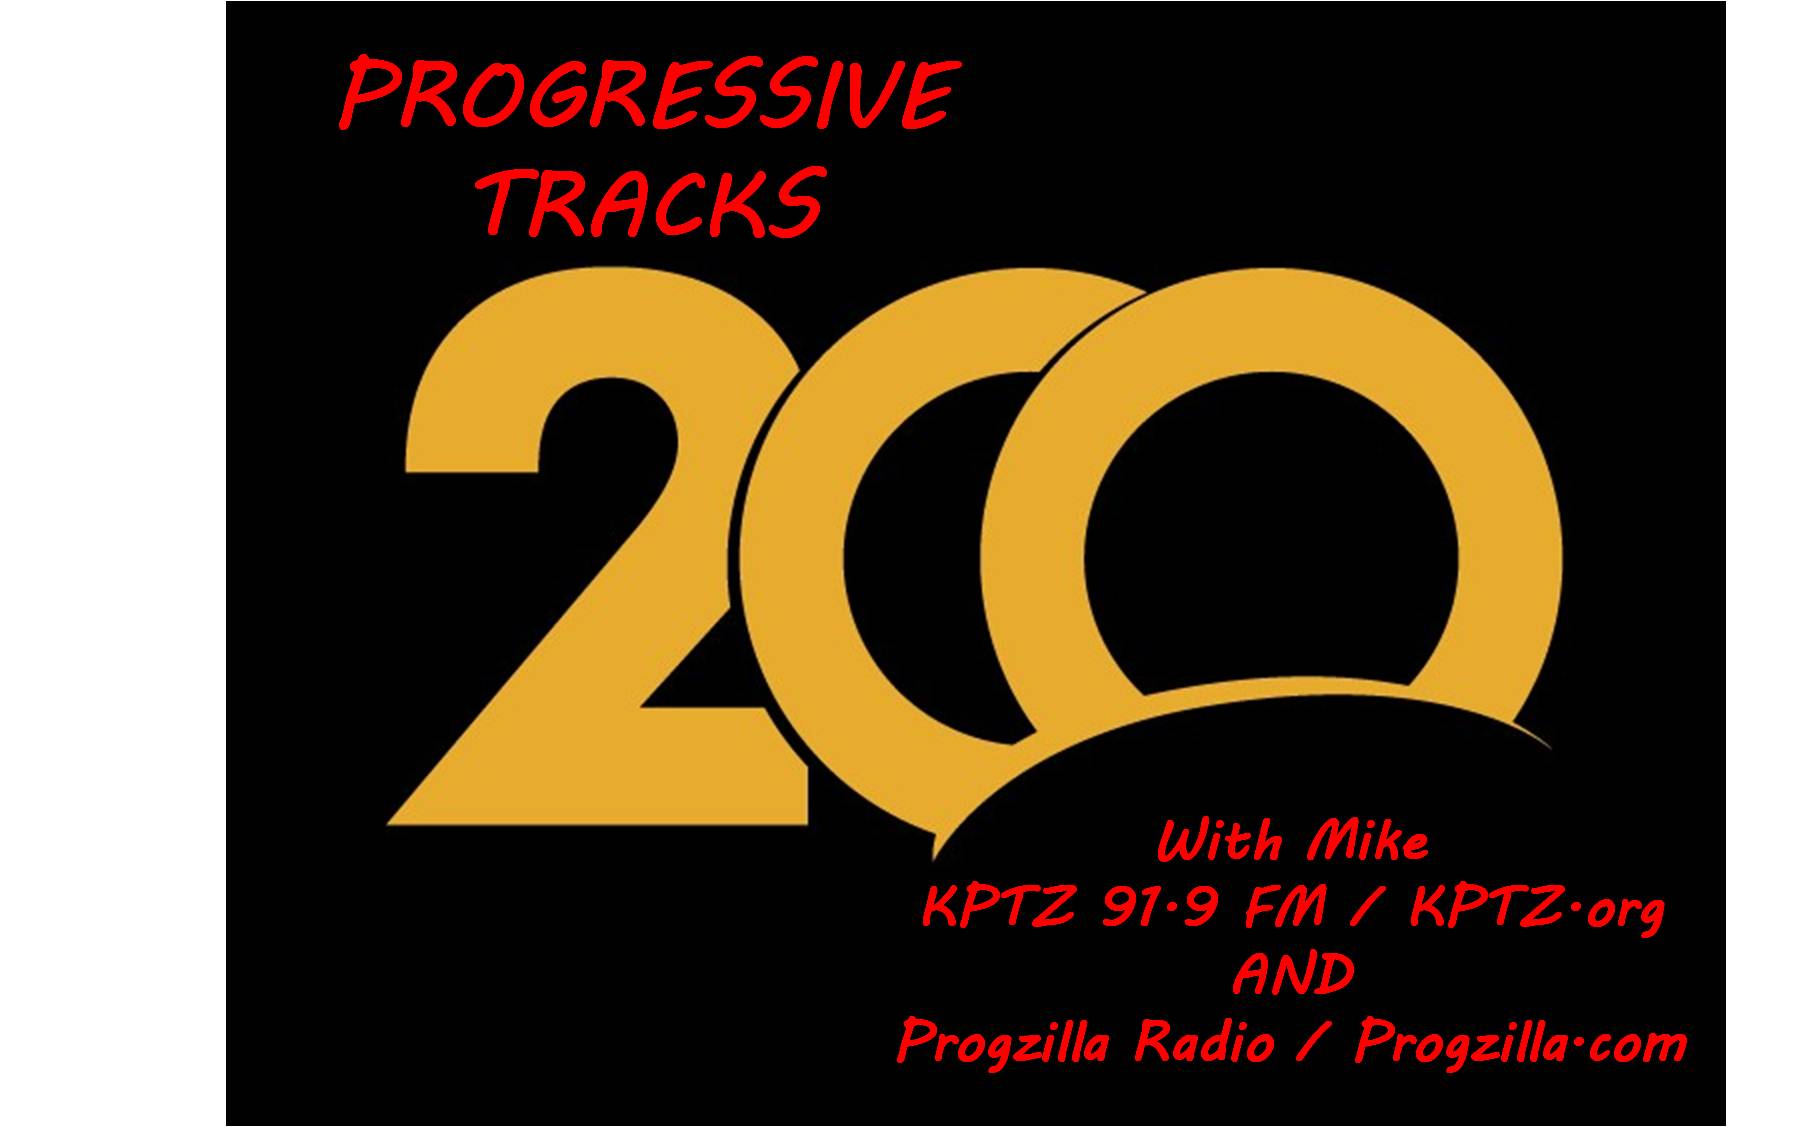 Progressive Tracks #200